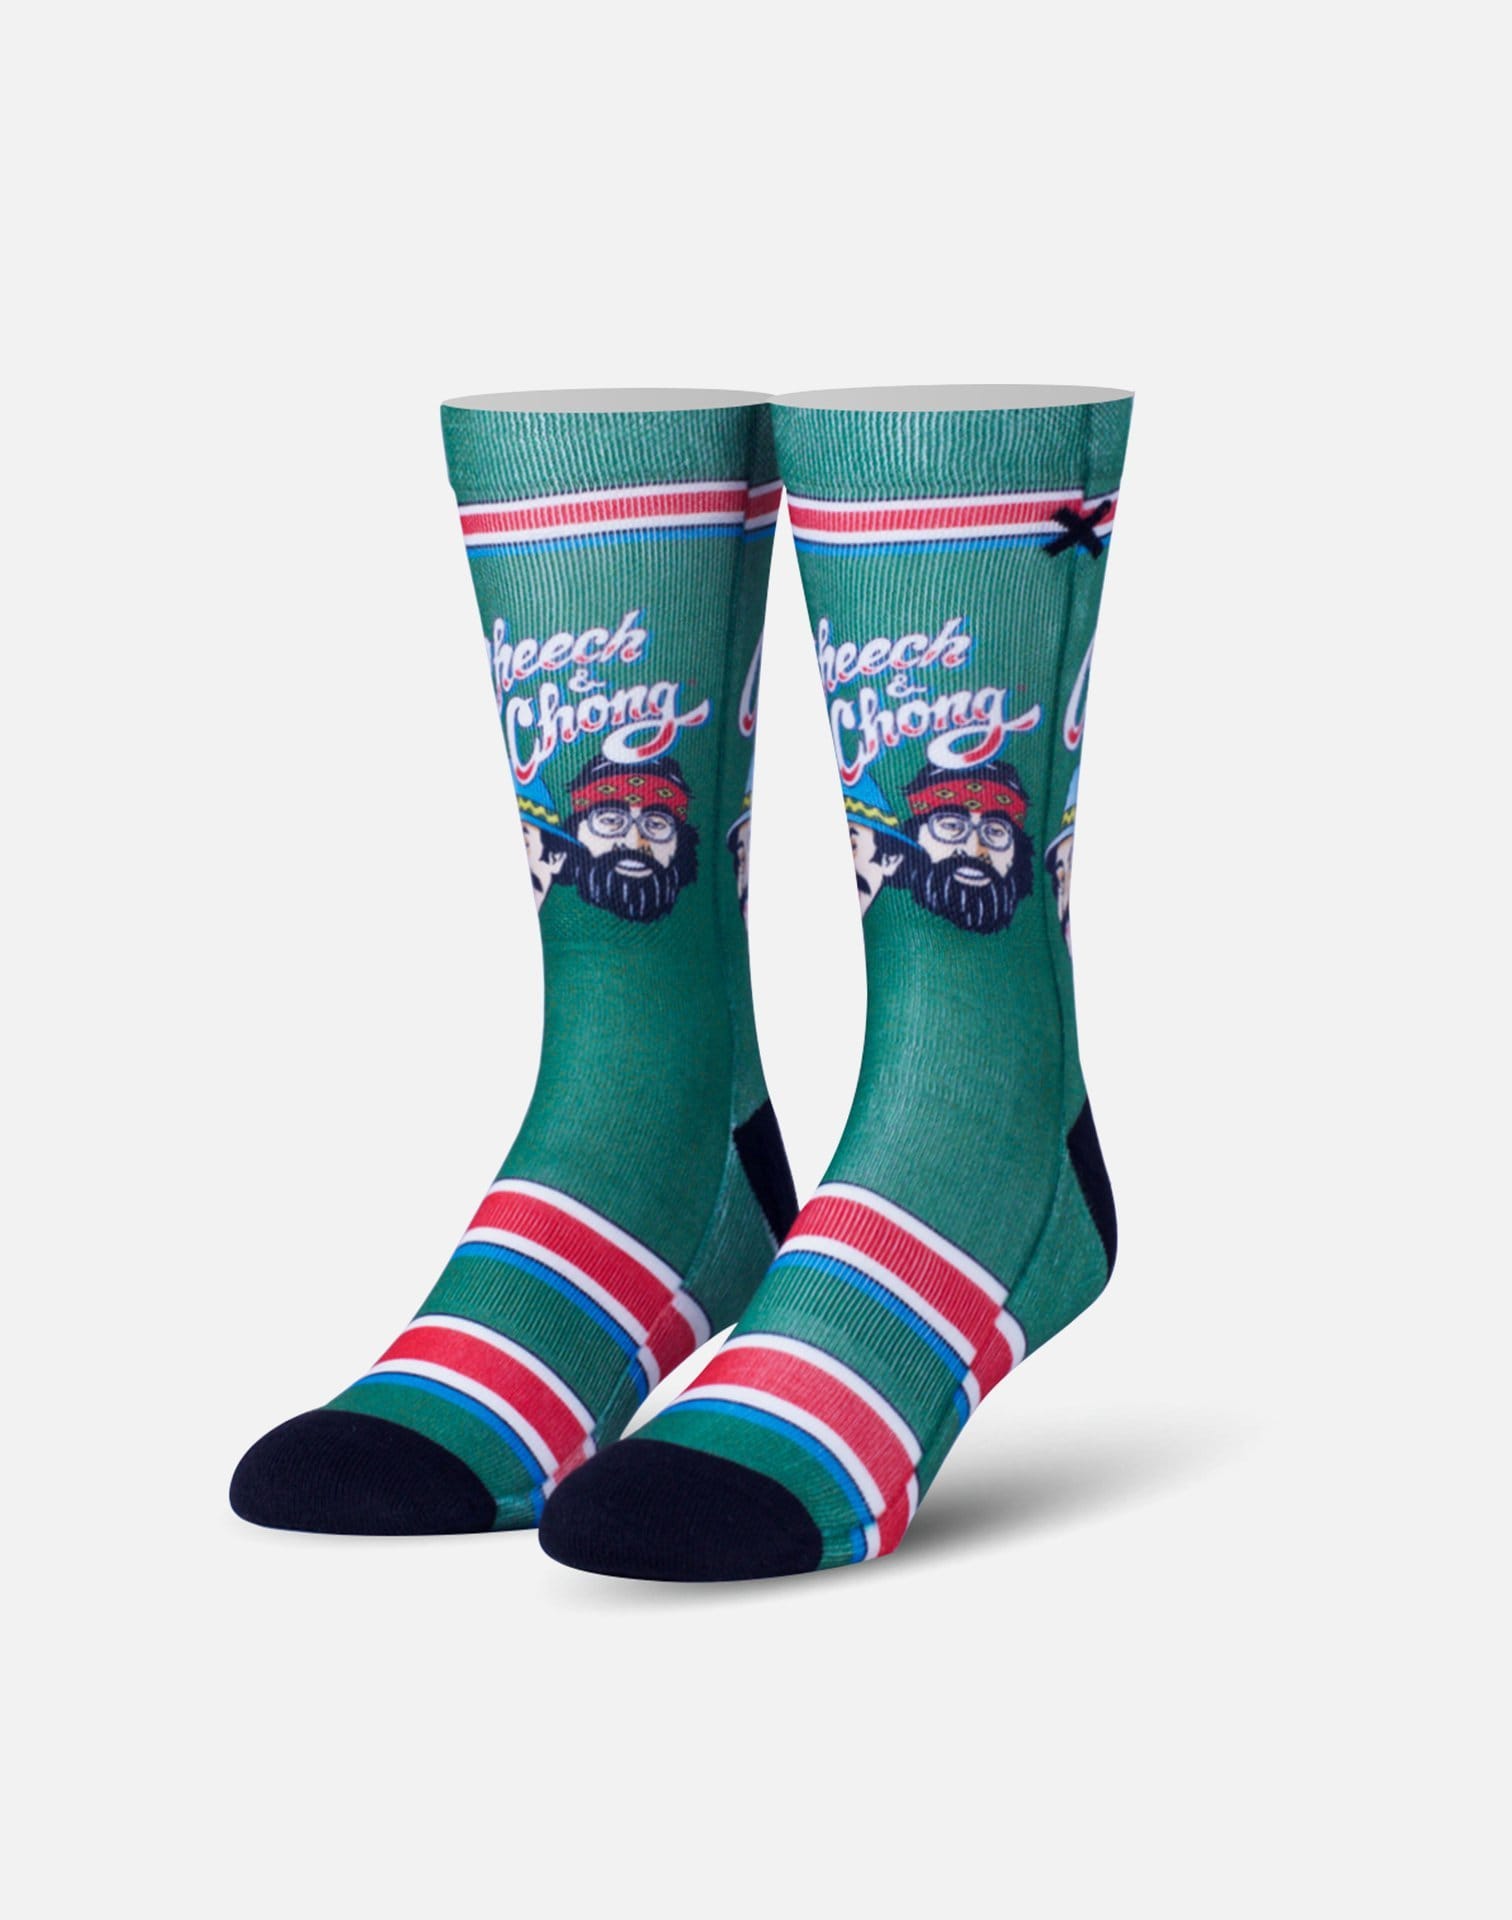 Odd Sox Cheech & Chong Retro Socks